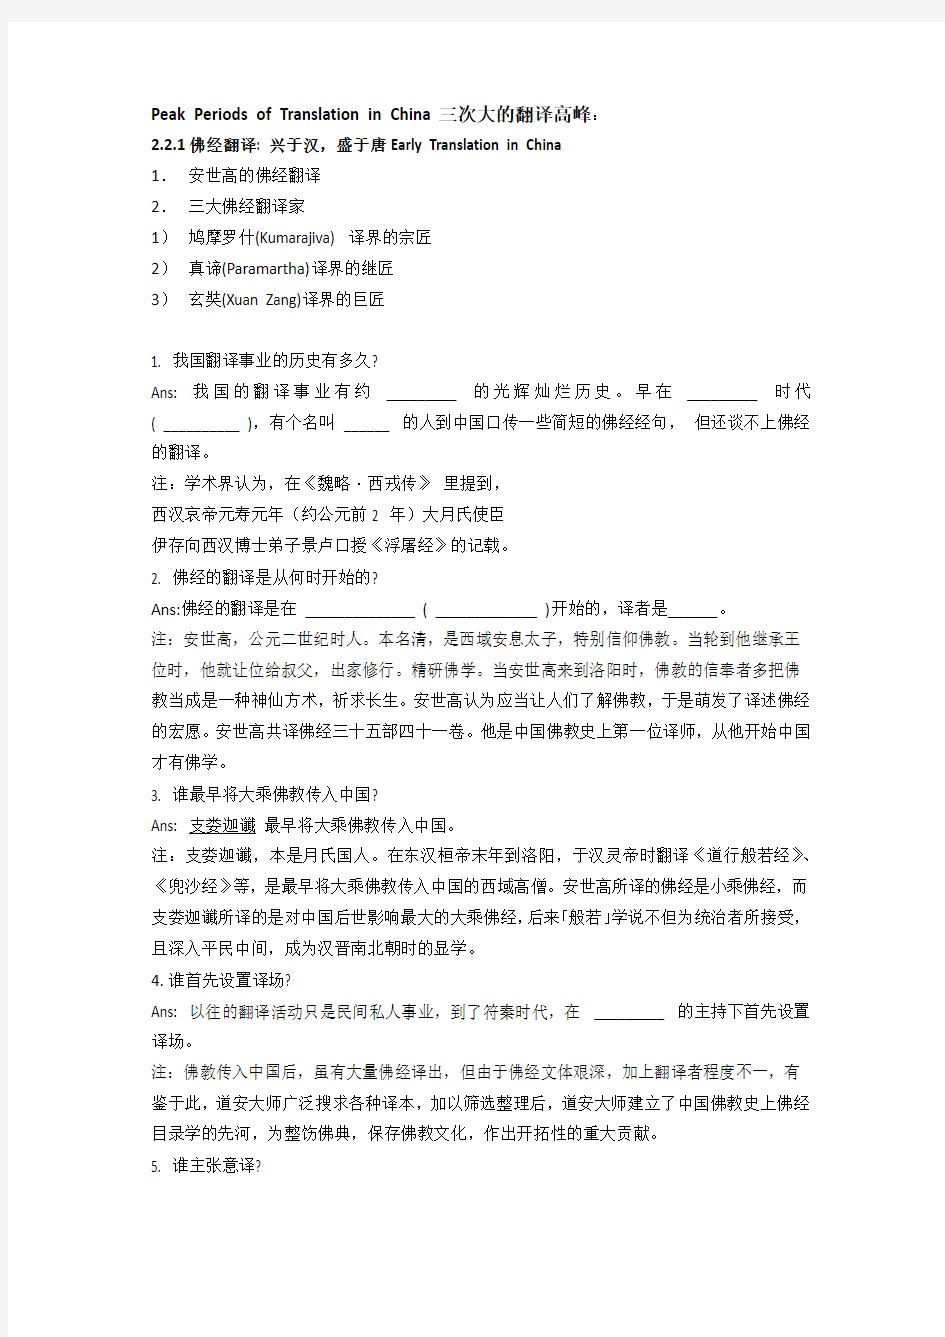 Peak Periods of Translation in China三次大的翻译高峰